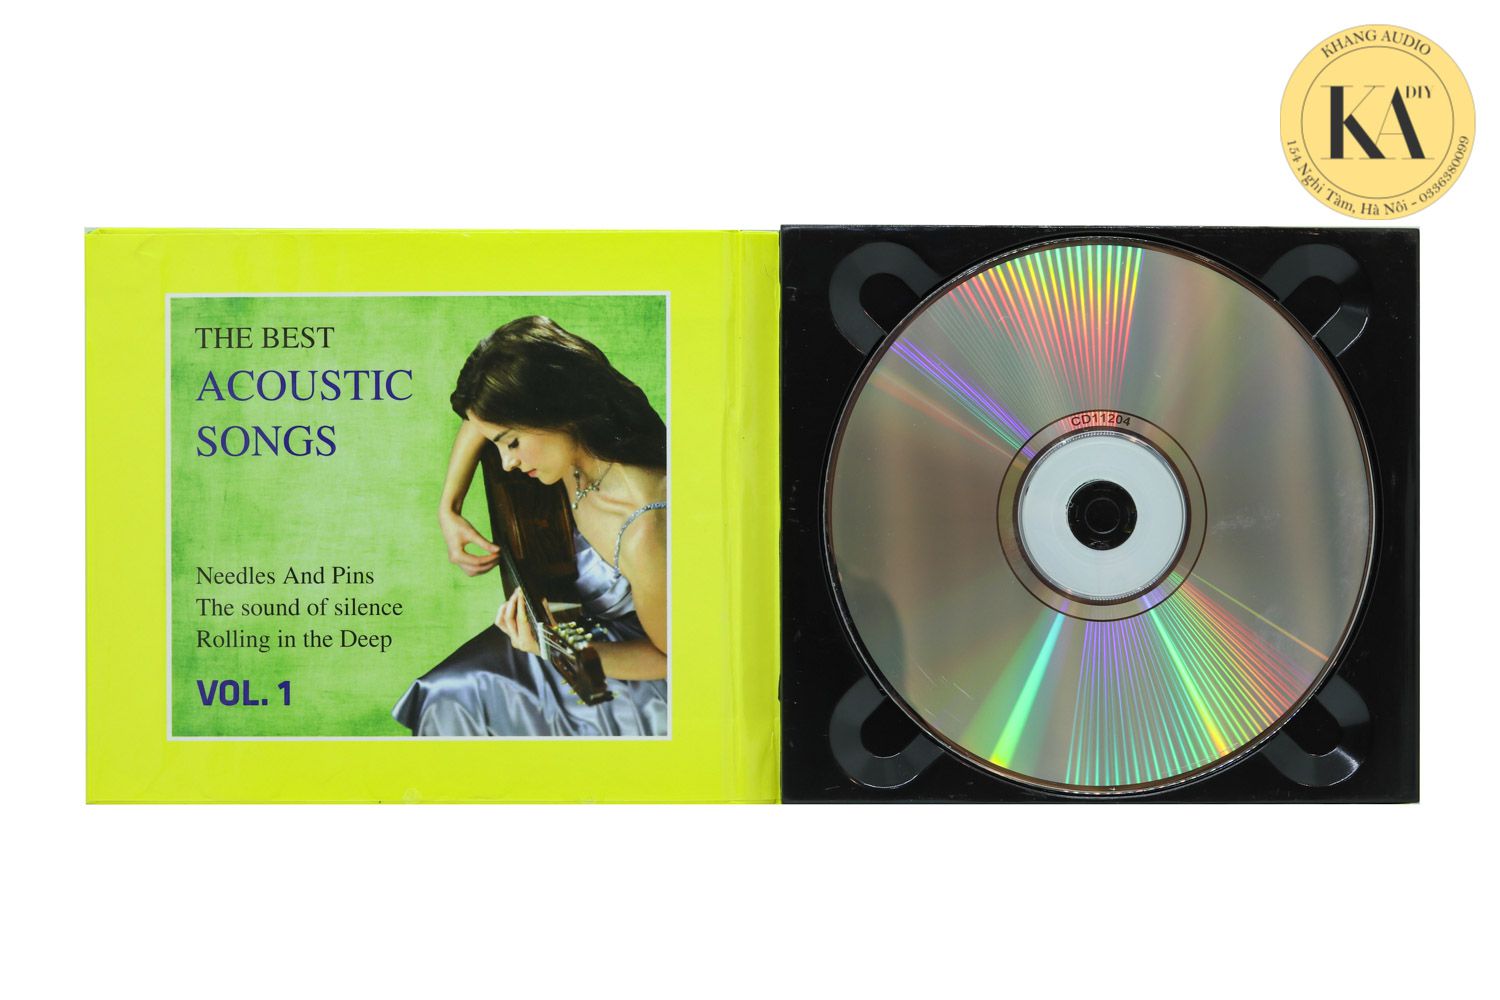 Master Acoustic Vol.1 Khang Audio 0336380099